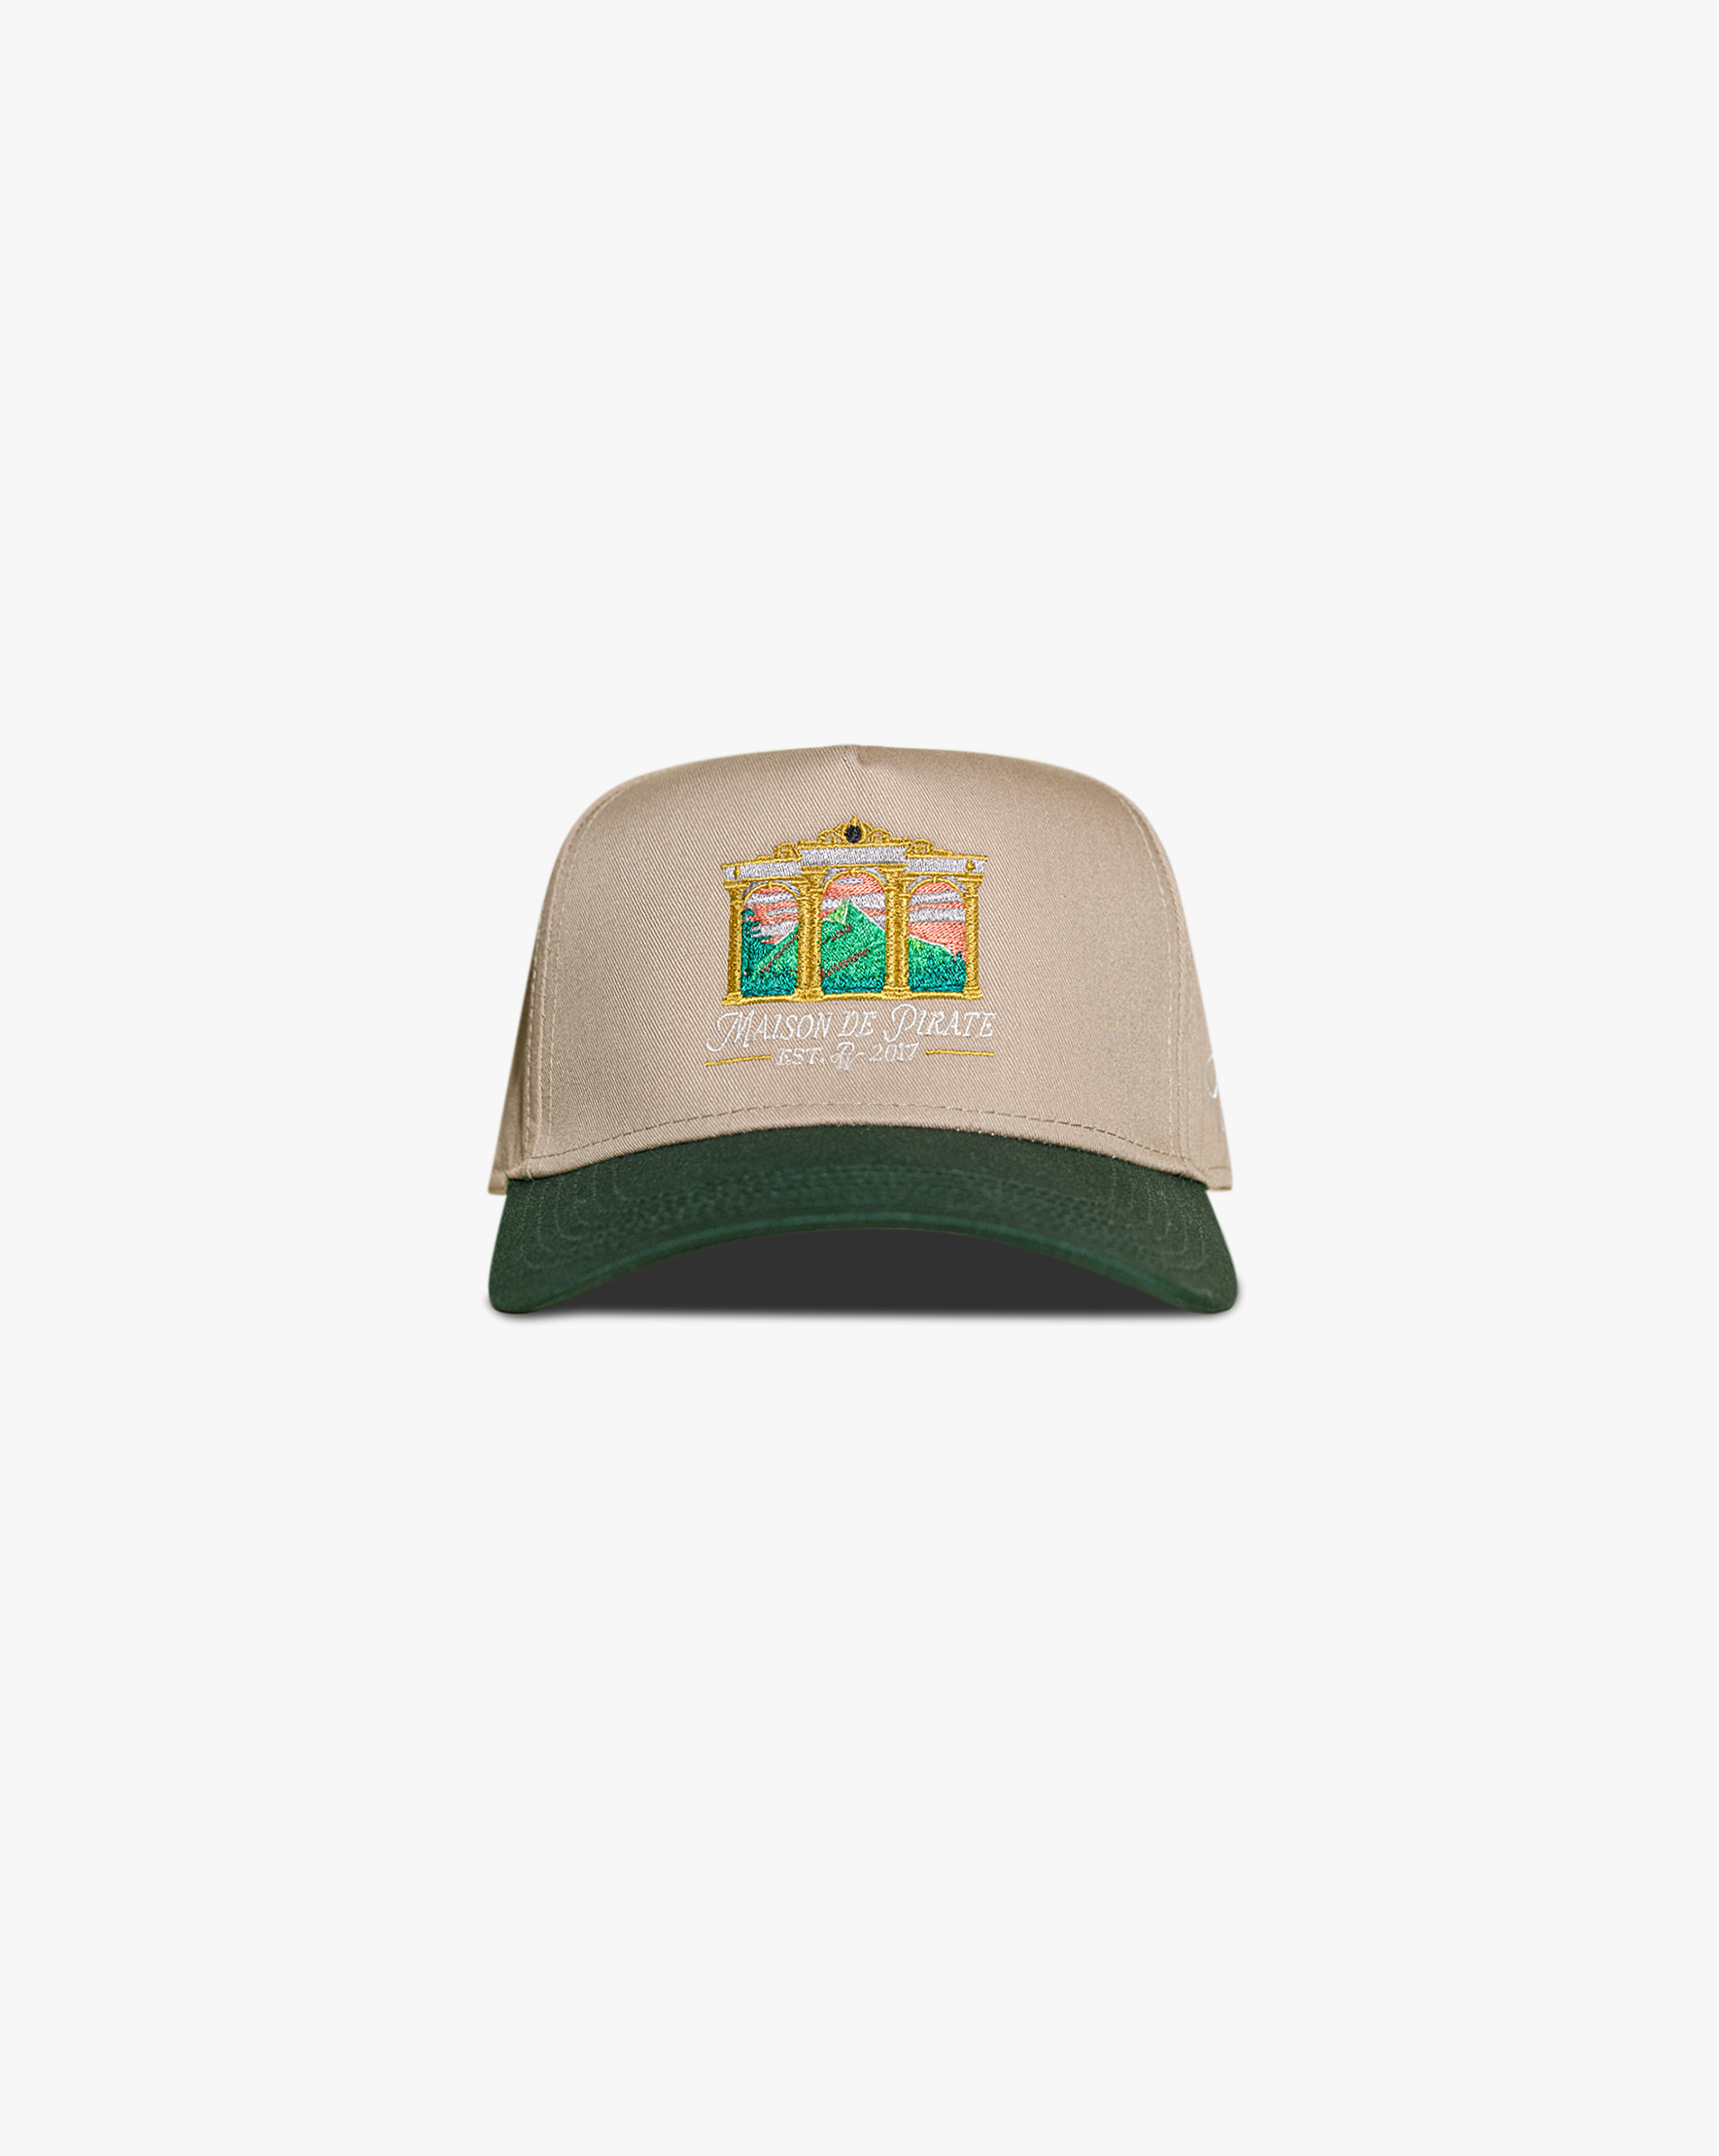 Pirate Skyline Maison de Pirate Hat (Khaki/Green)